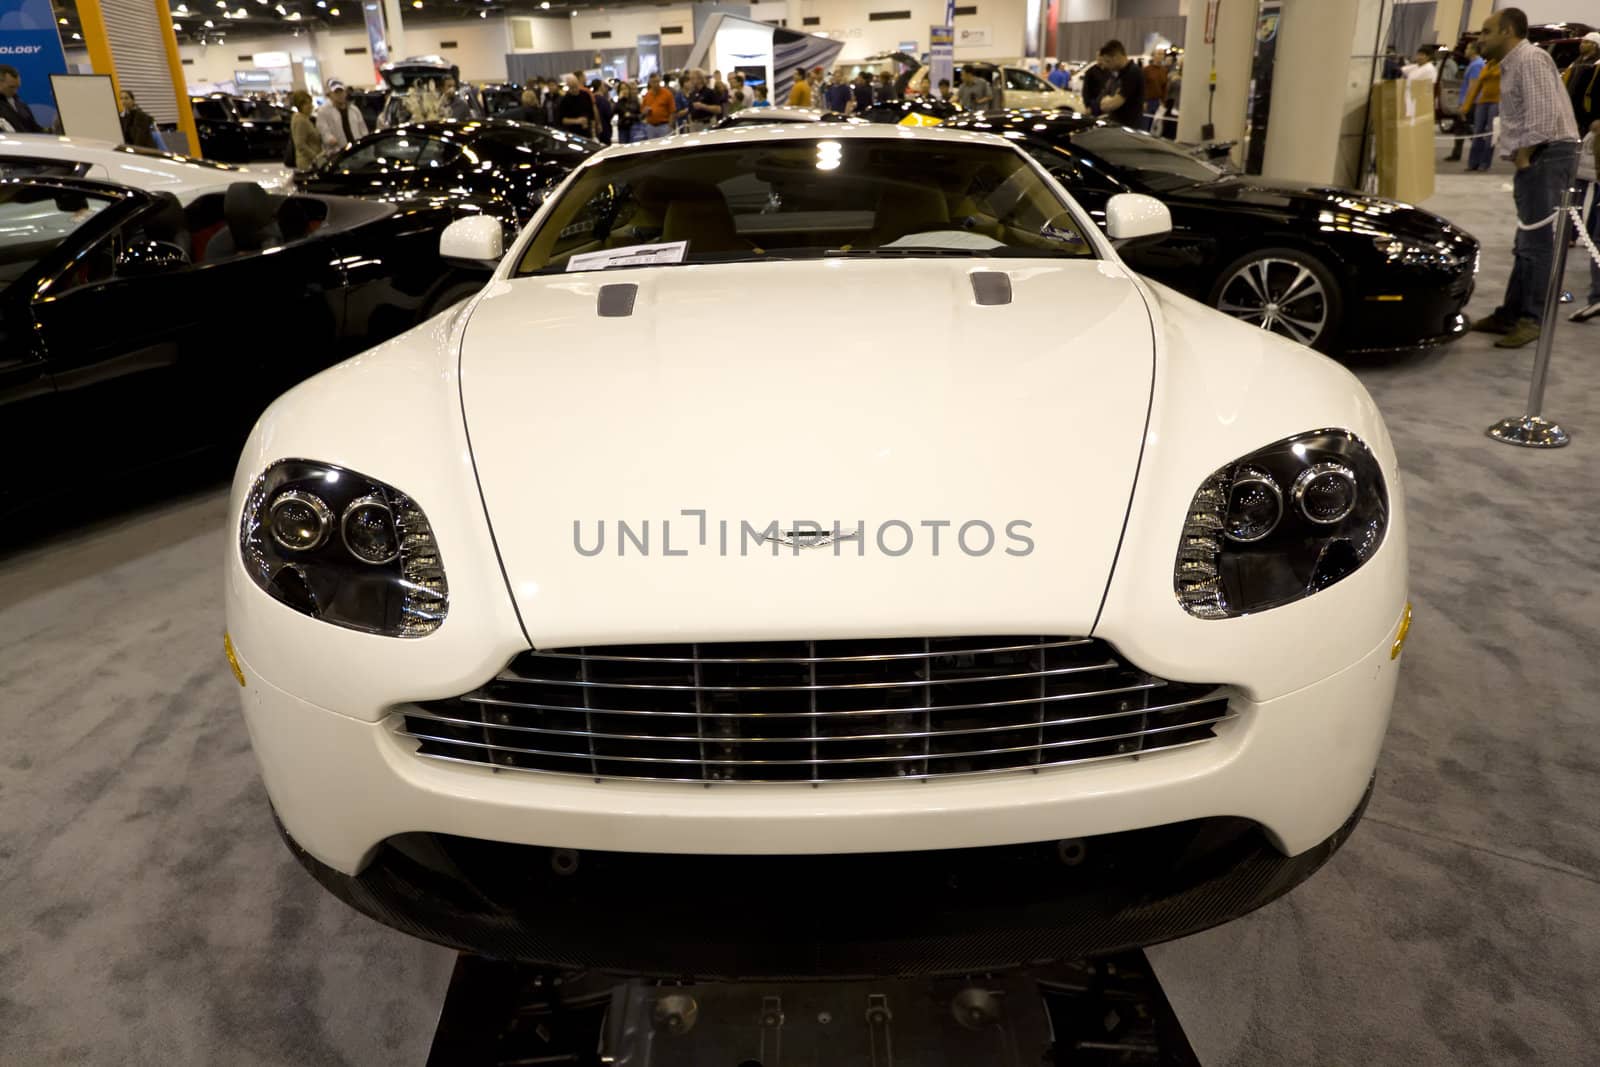 HOUSTON - JANUARY 2012: The Aston Martin Vantage sports car at the Houston International Auto Show on January 28, 2012 in Houston, Texas.